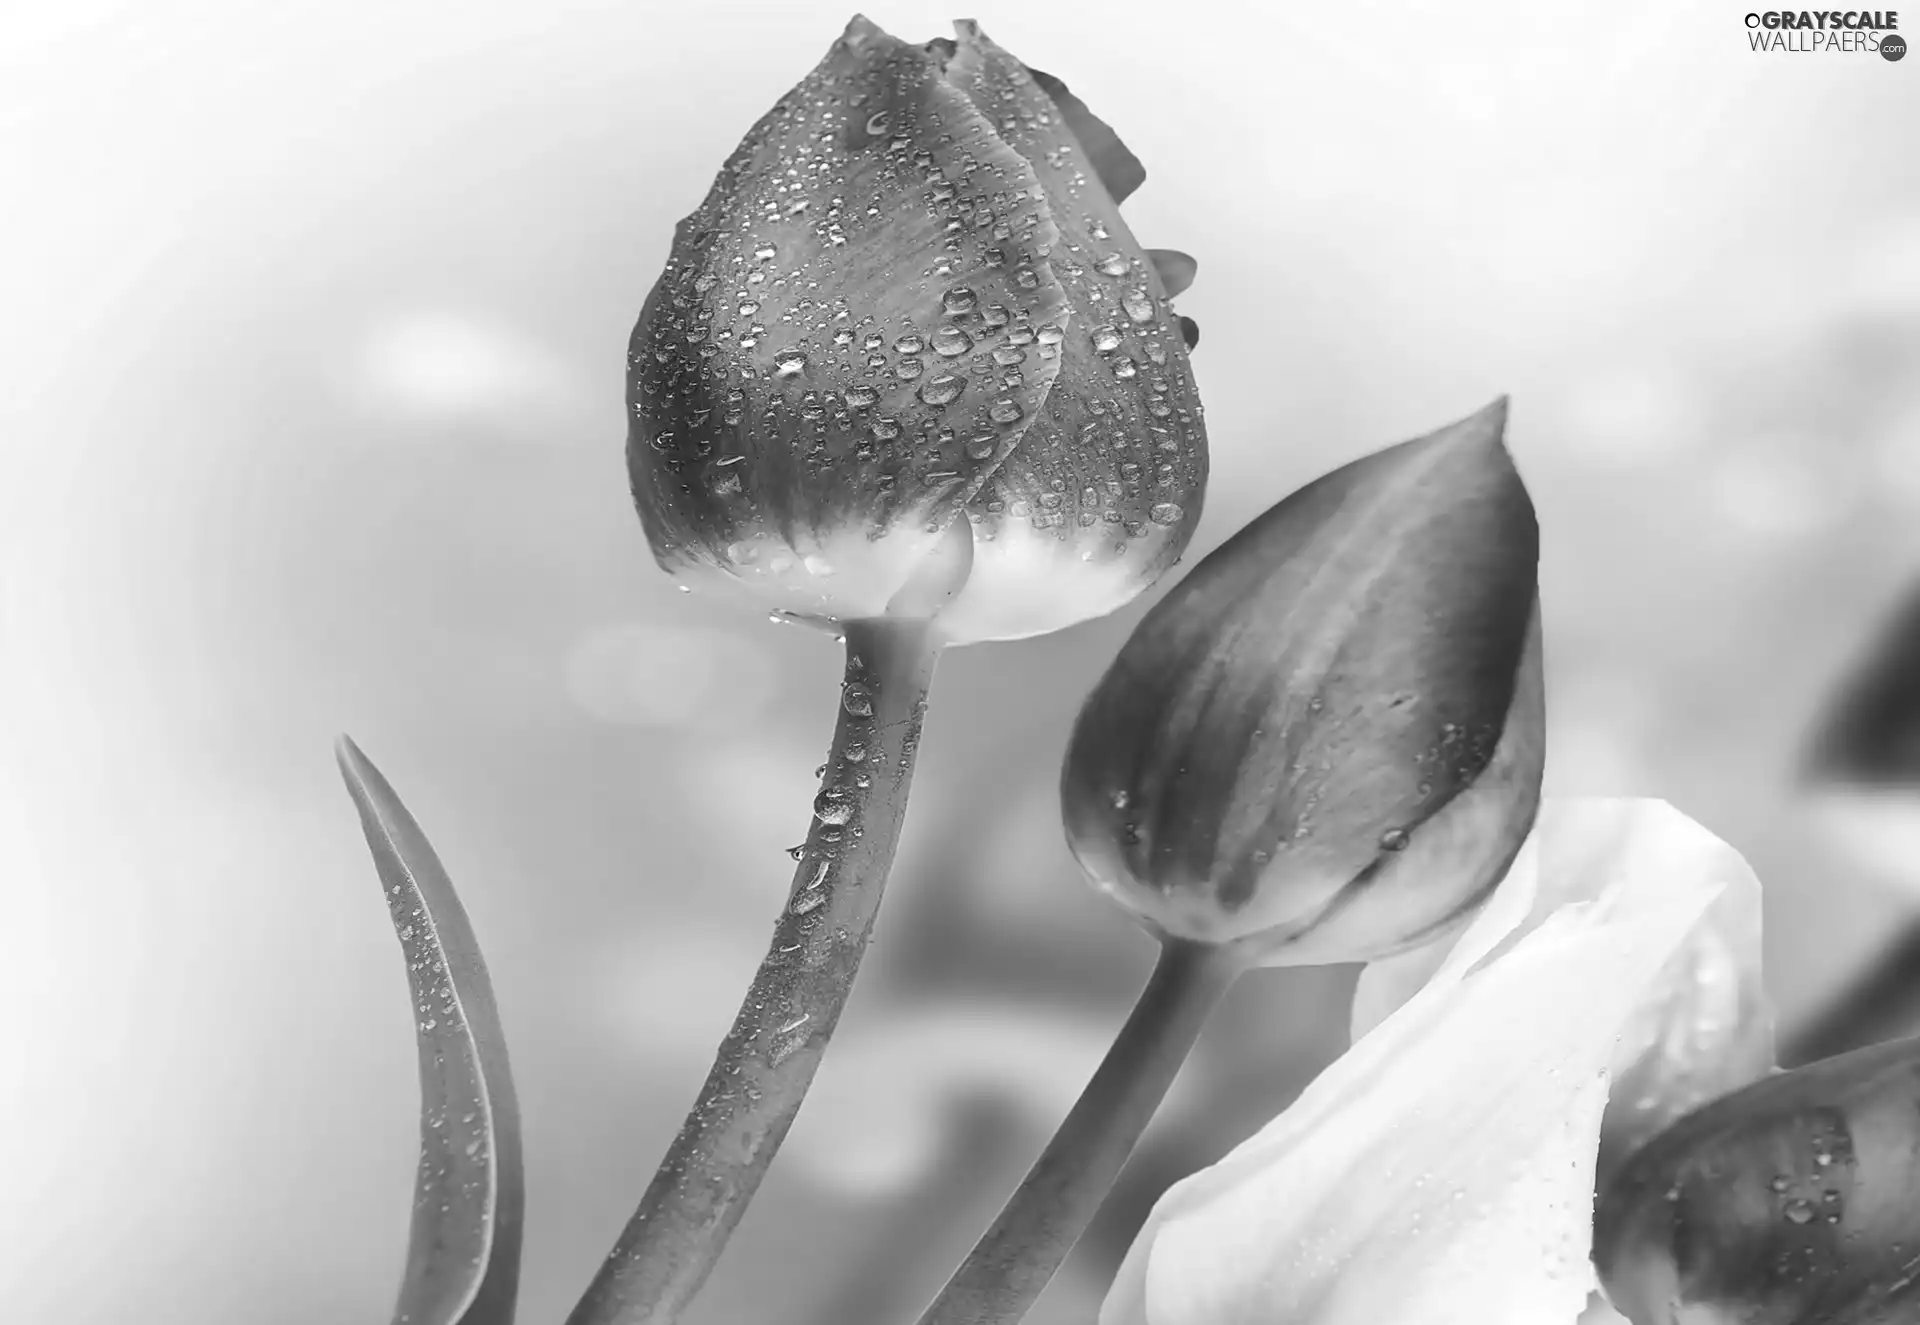 drops, Flowers, Tulips